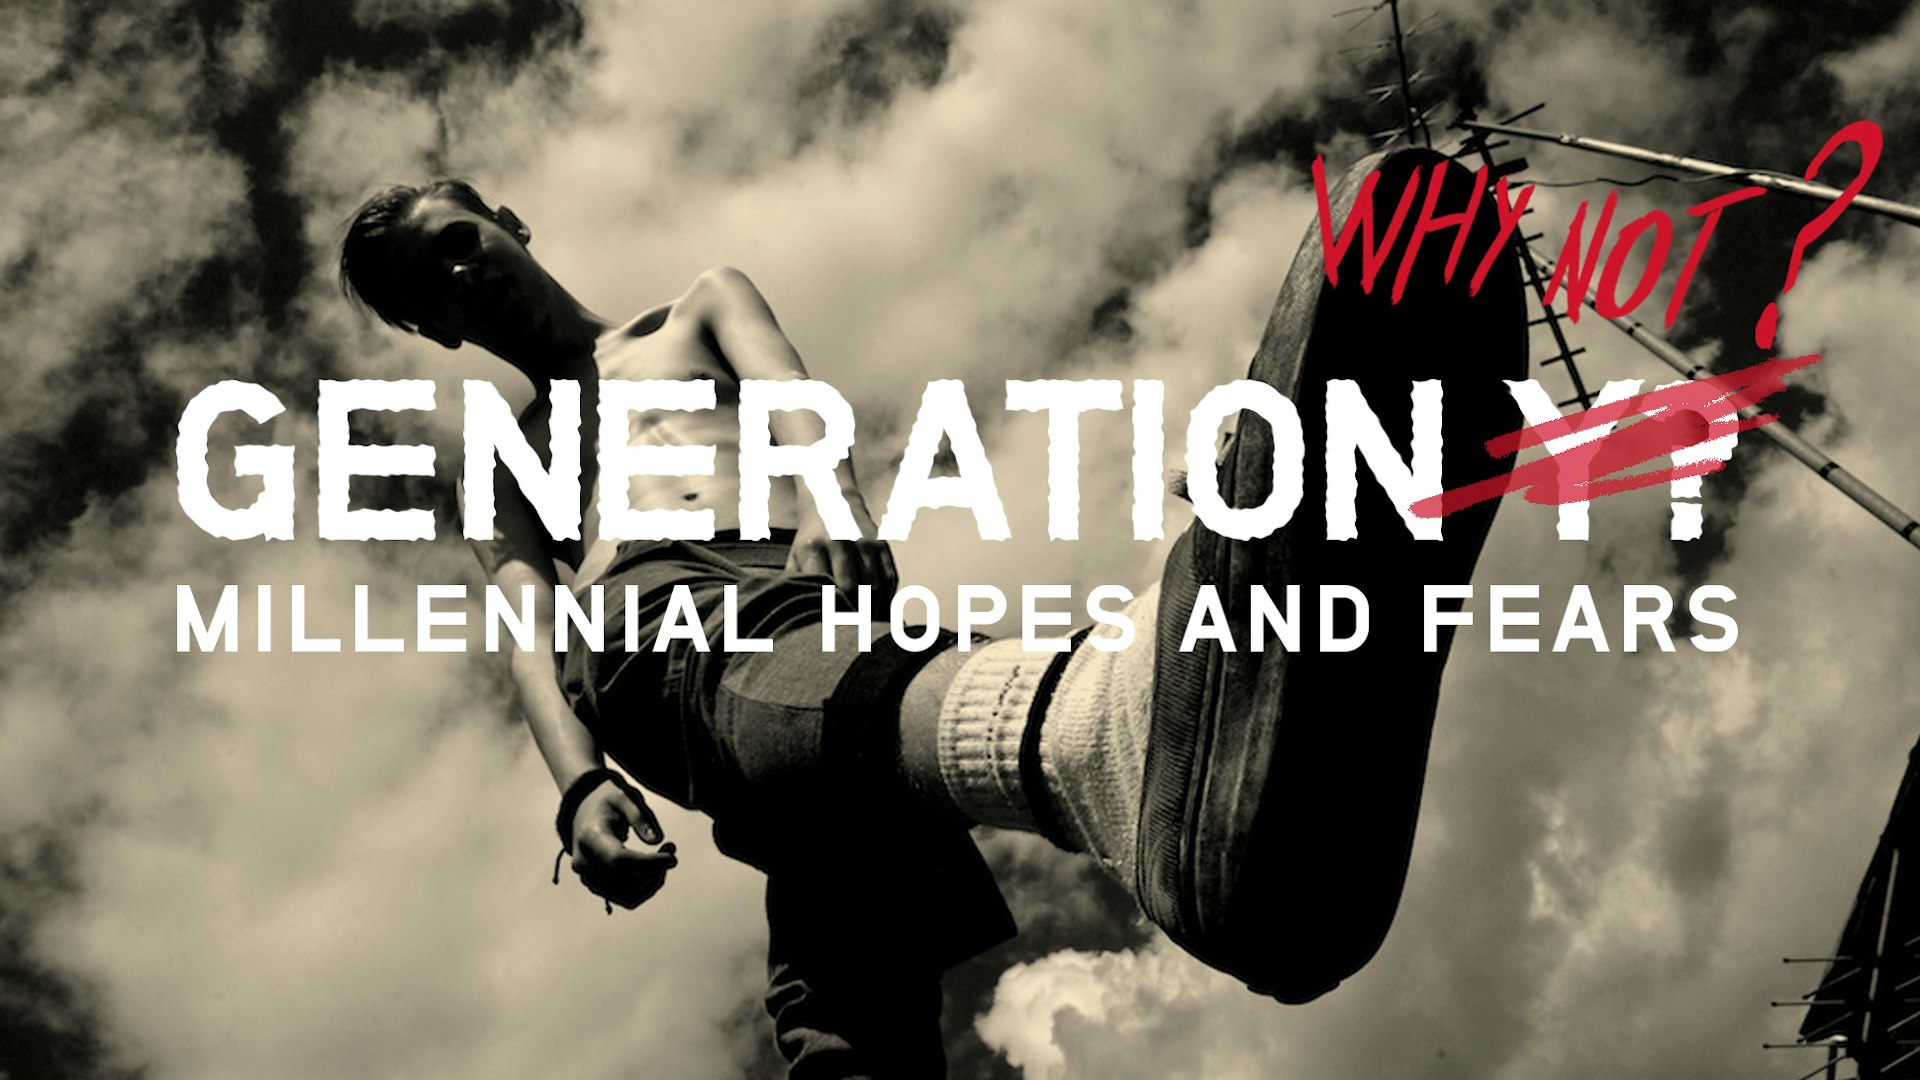 Generation Y? We prefer Generation Why Not?